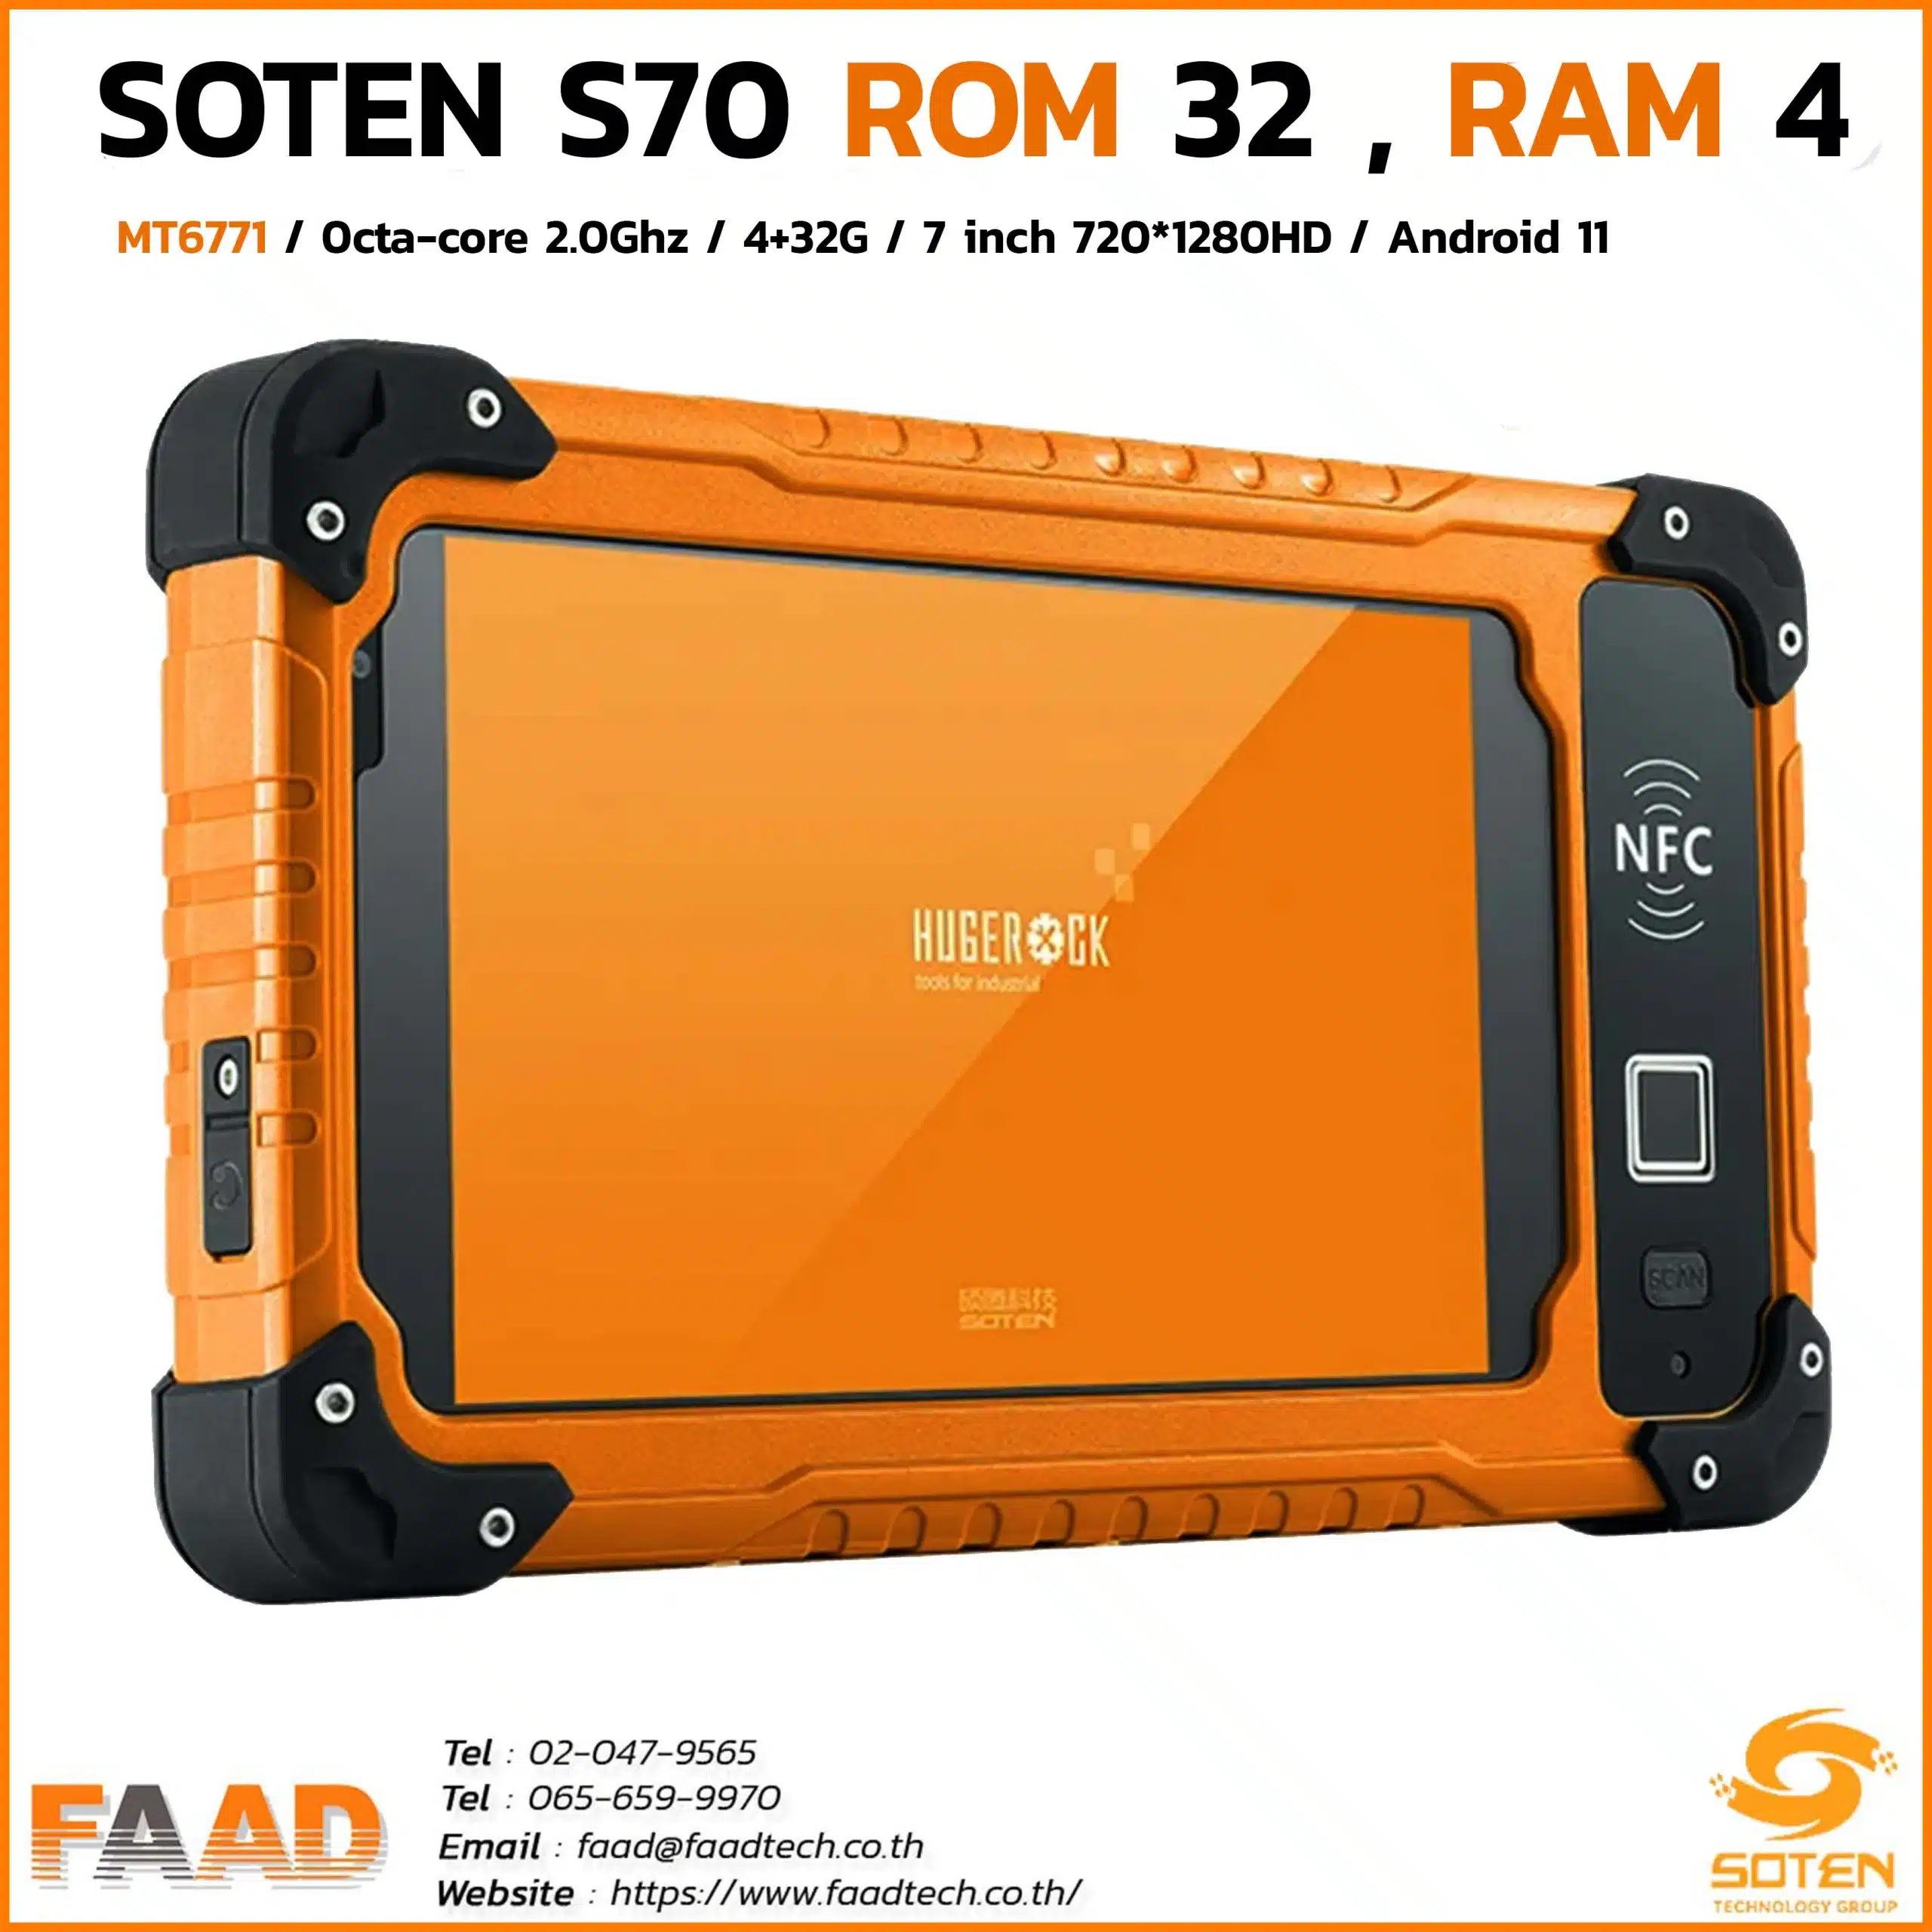 Tablet สำหรับงานอุตสาหกรรม (Industrial Tablet) – SOTAC S70